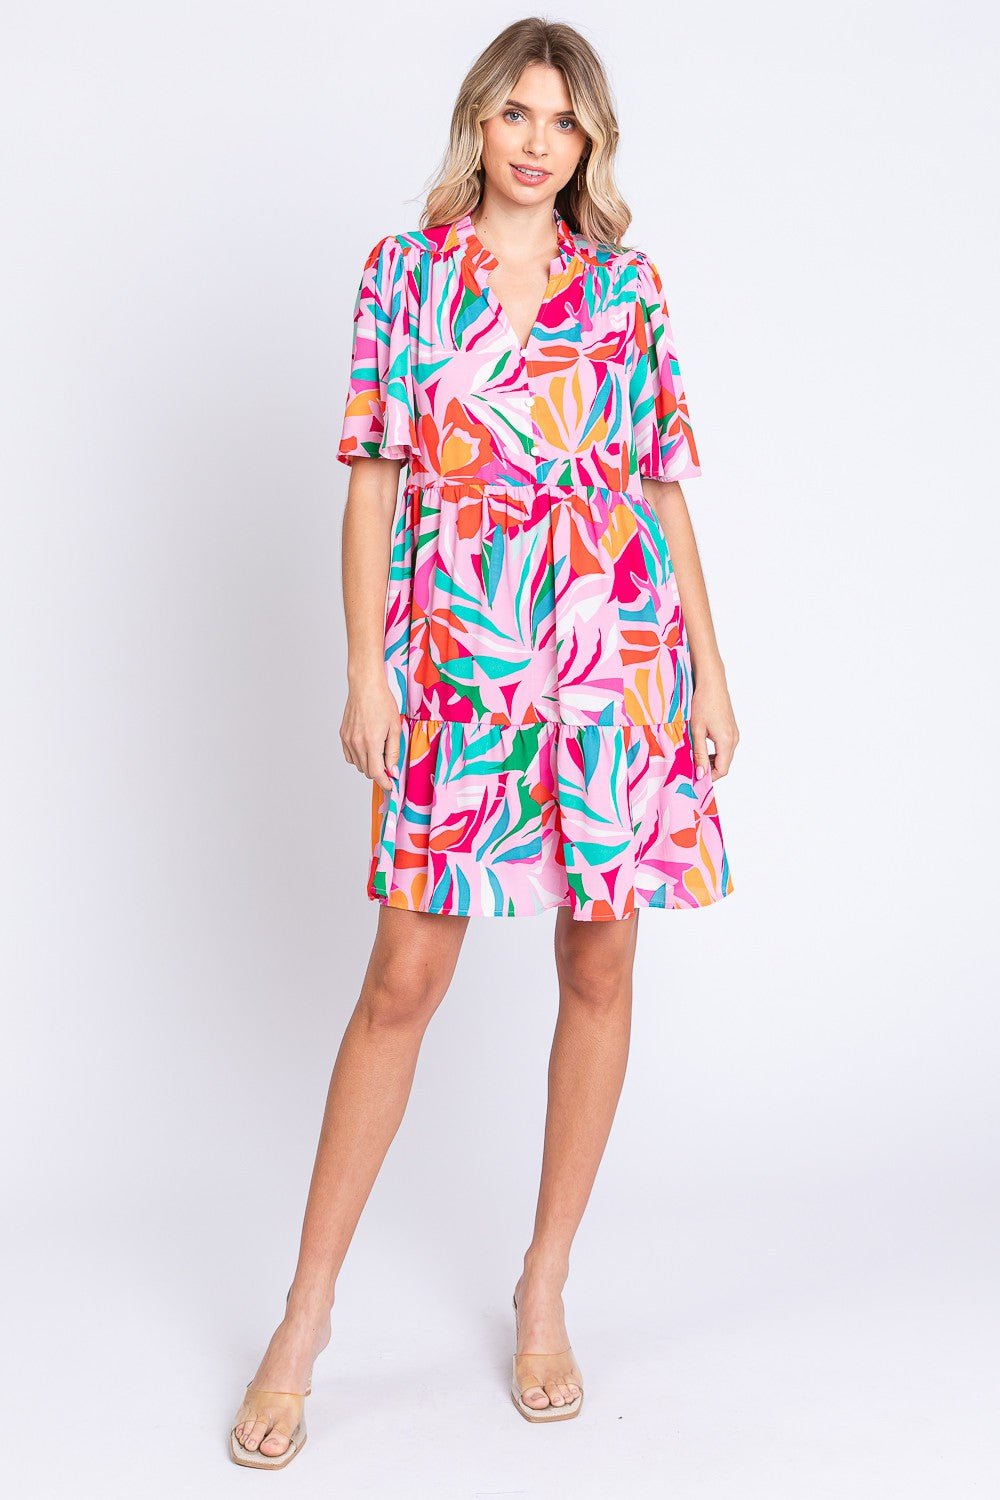 Tropical Floral Print Short Sleeve Mini Dress in Pink/GreenMini DressGeeGee